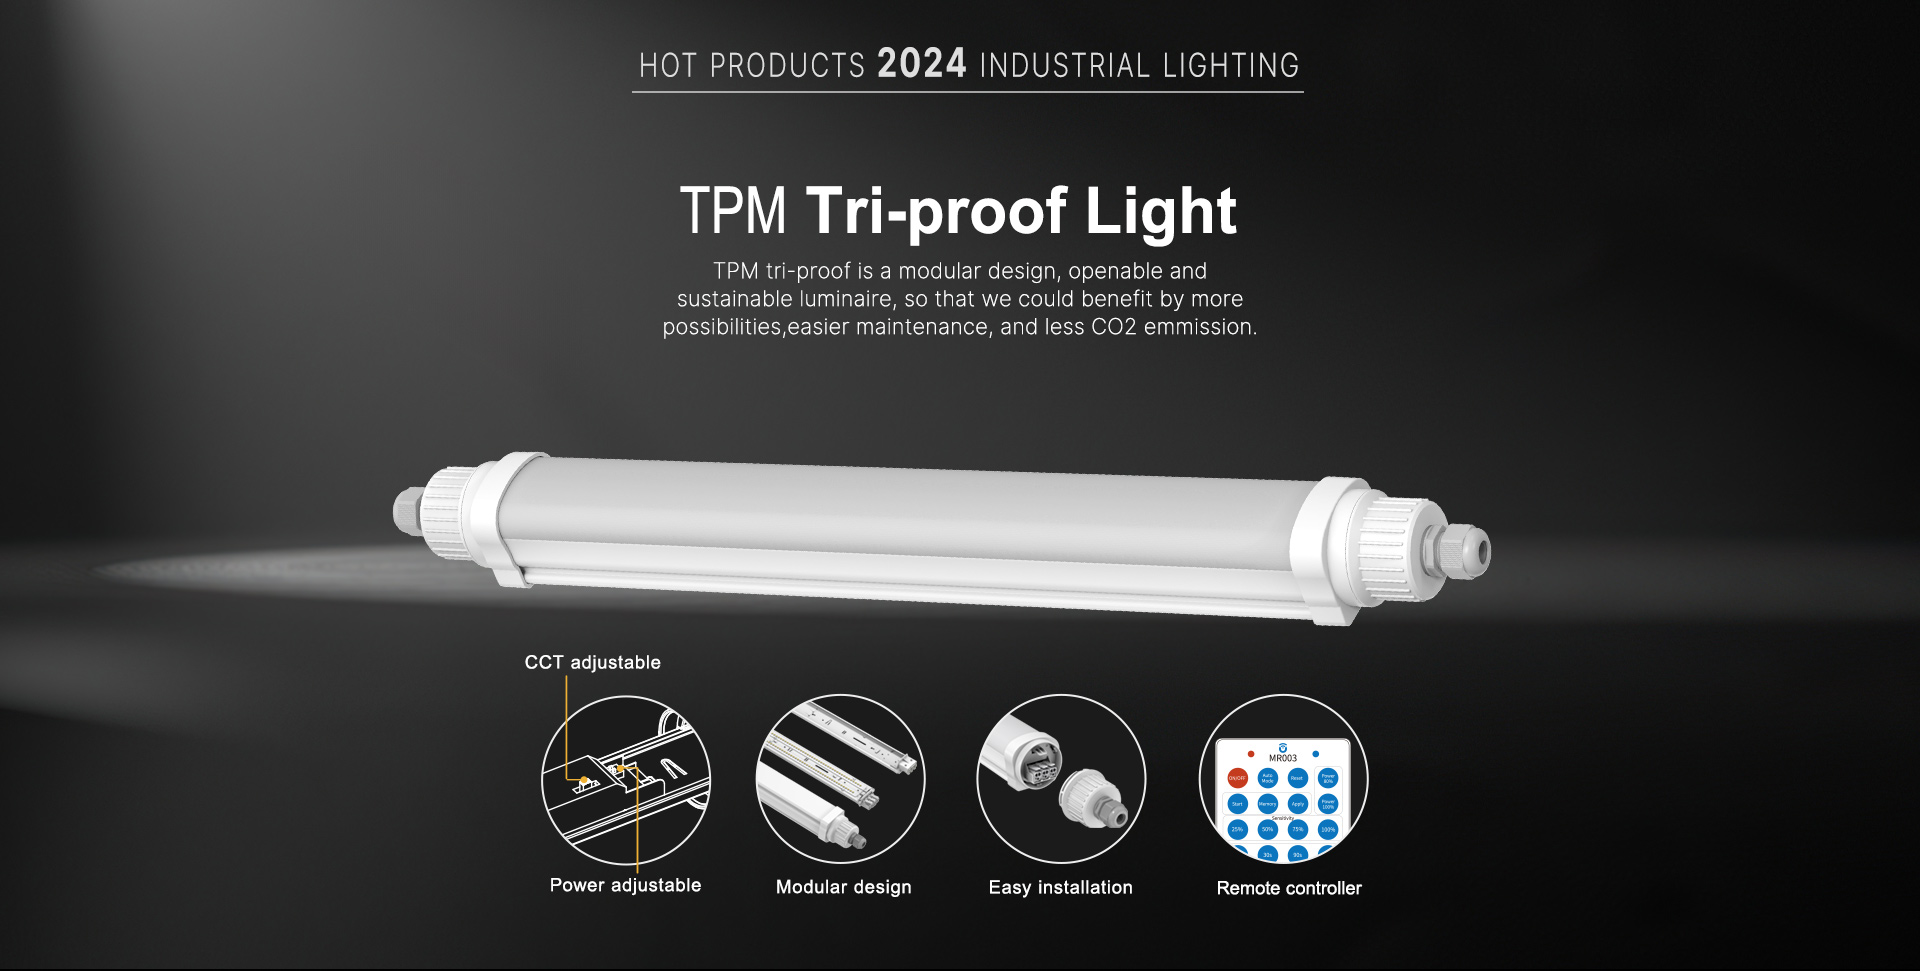 TPM Tri-proof Light